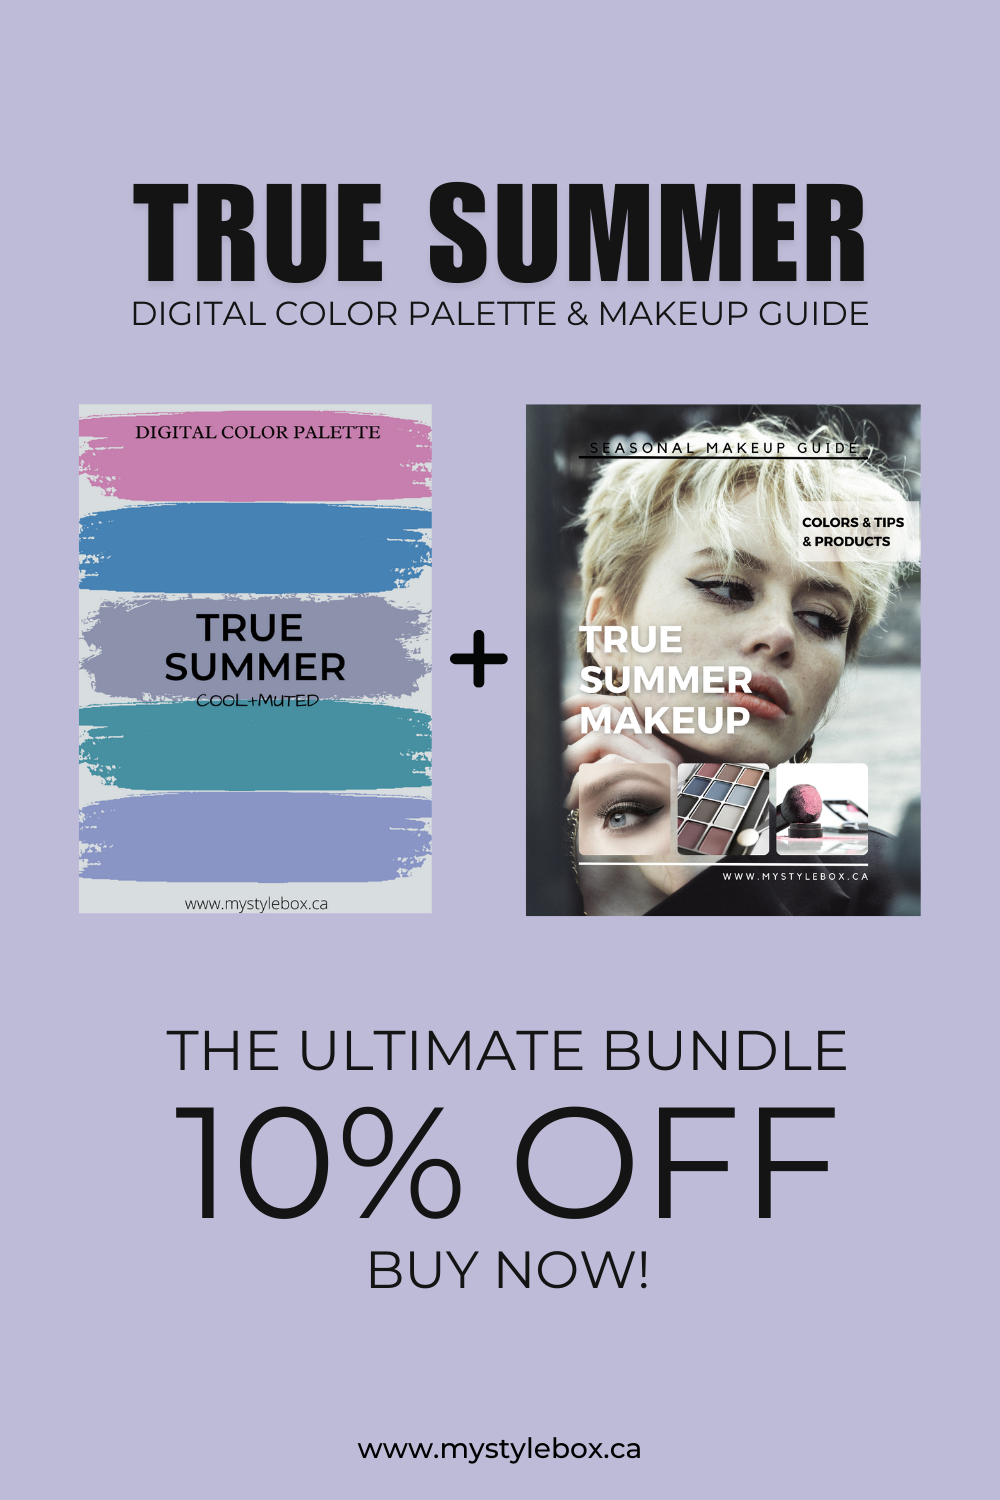 True (Cool) Summer Digital Color Palette and Makeup Guide